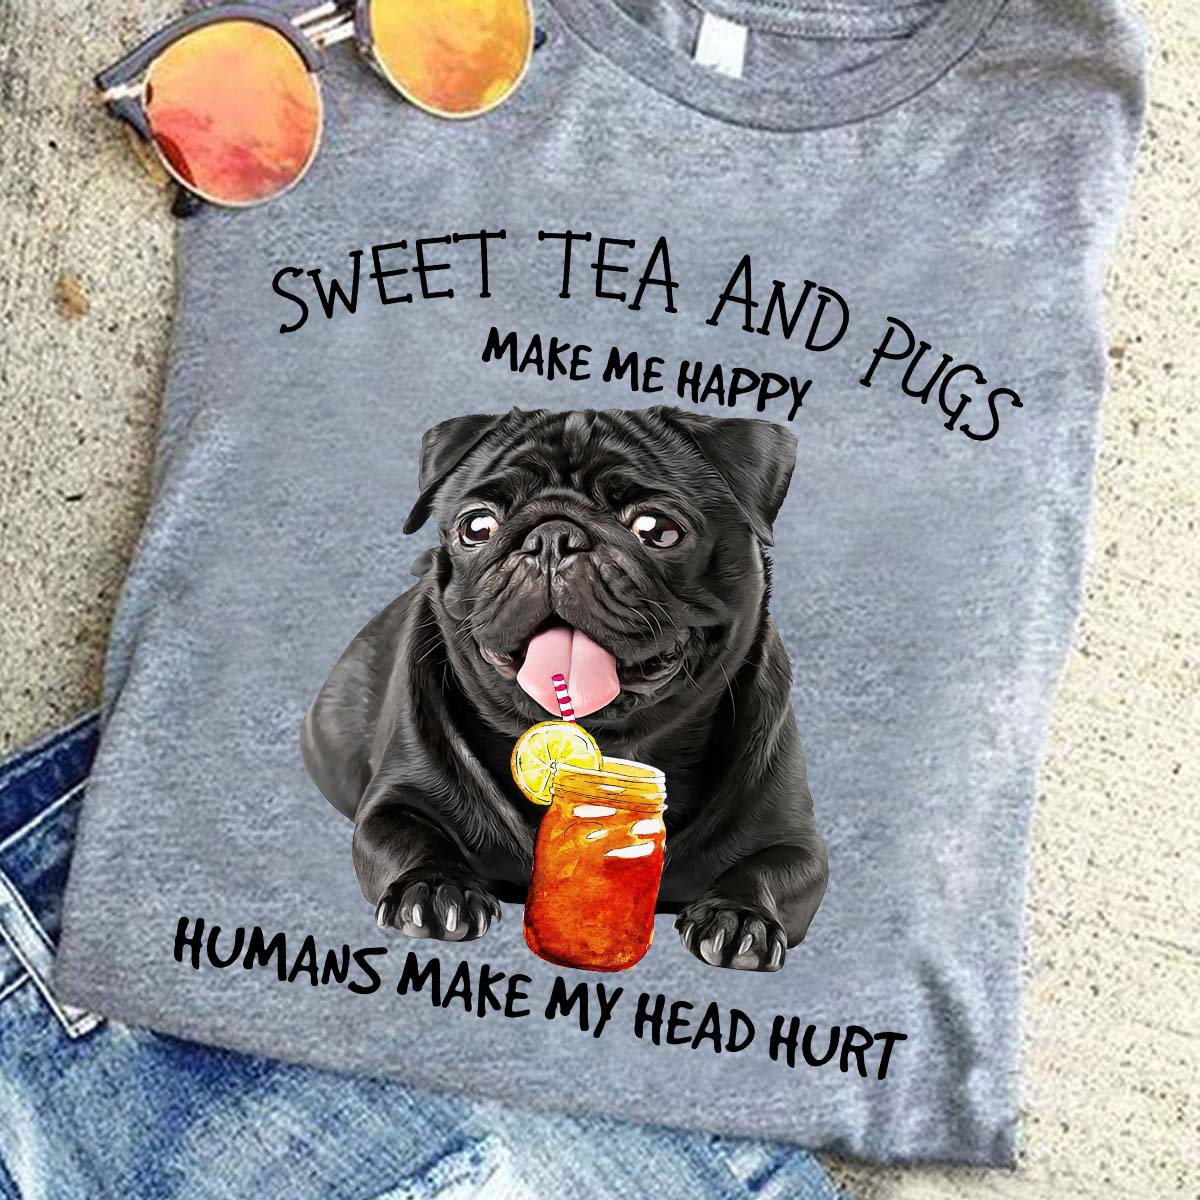 Sweet tea and pugs make me happy humans make my head hurt